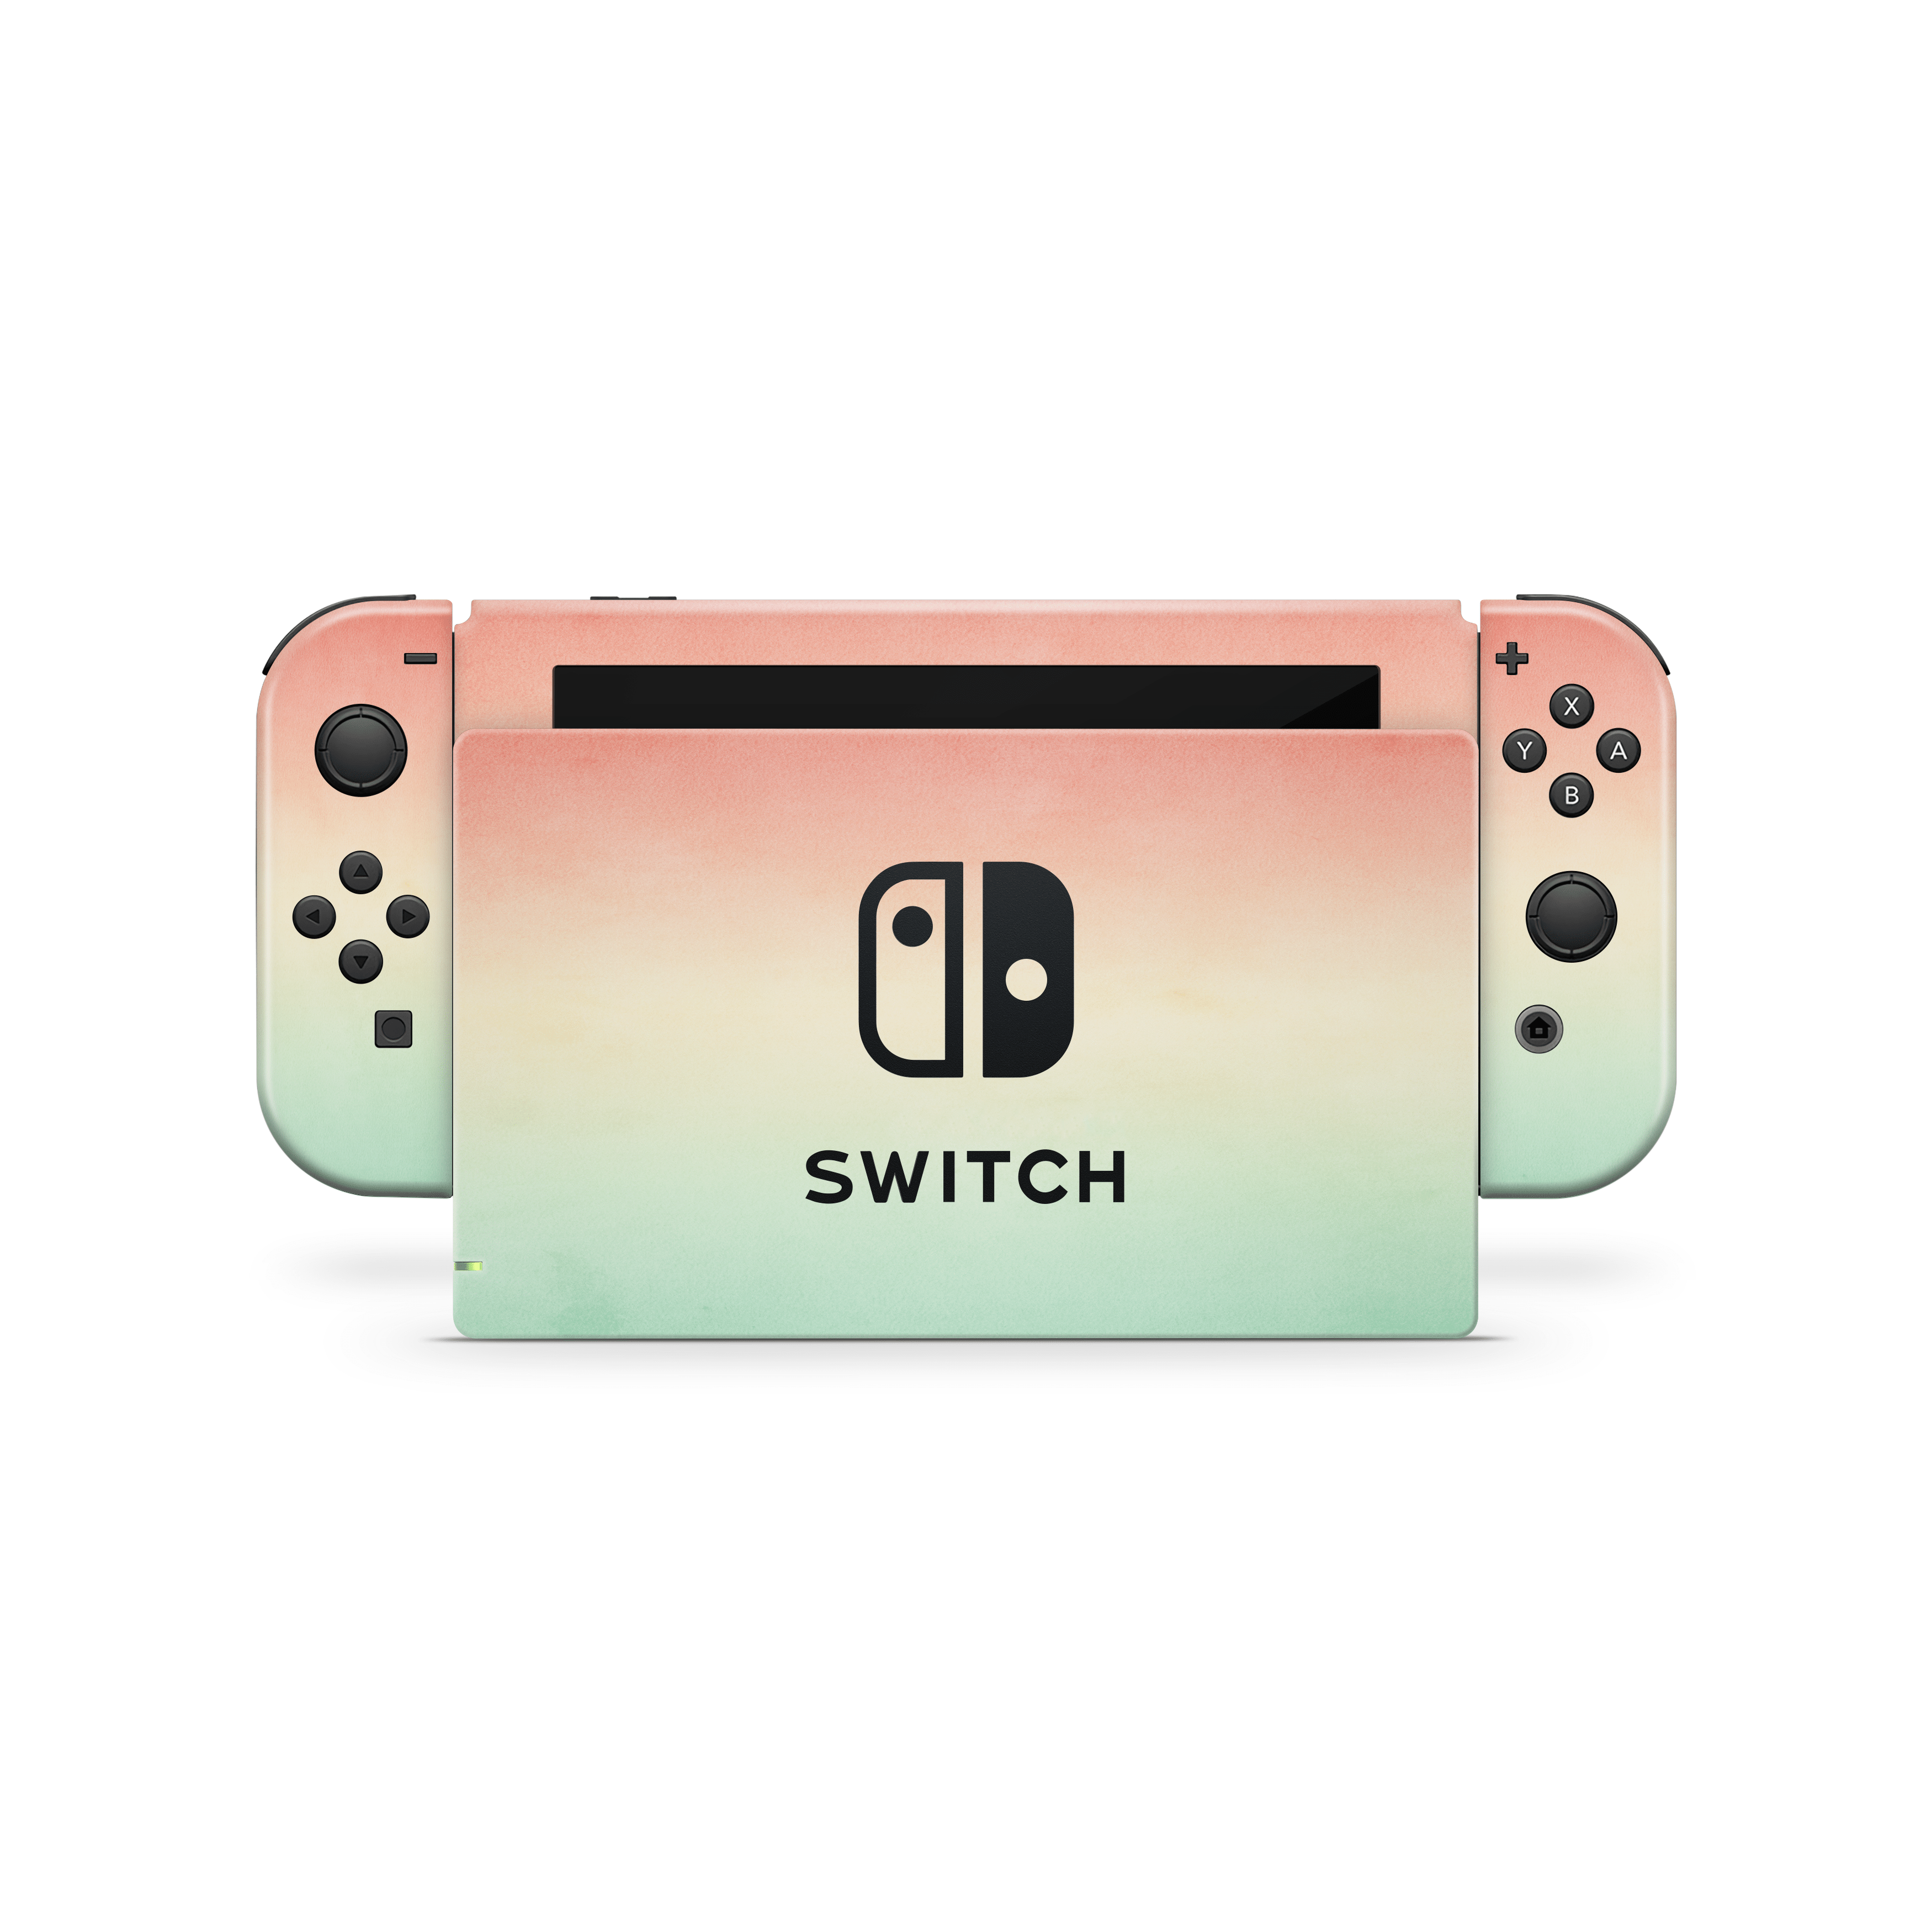 Peachy Sunset Nintendo Switch Skin